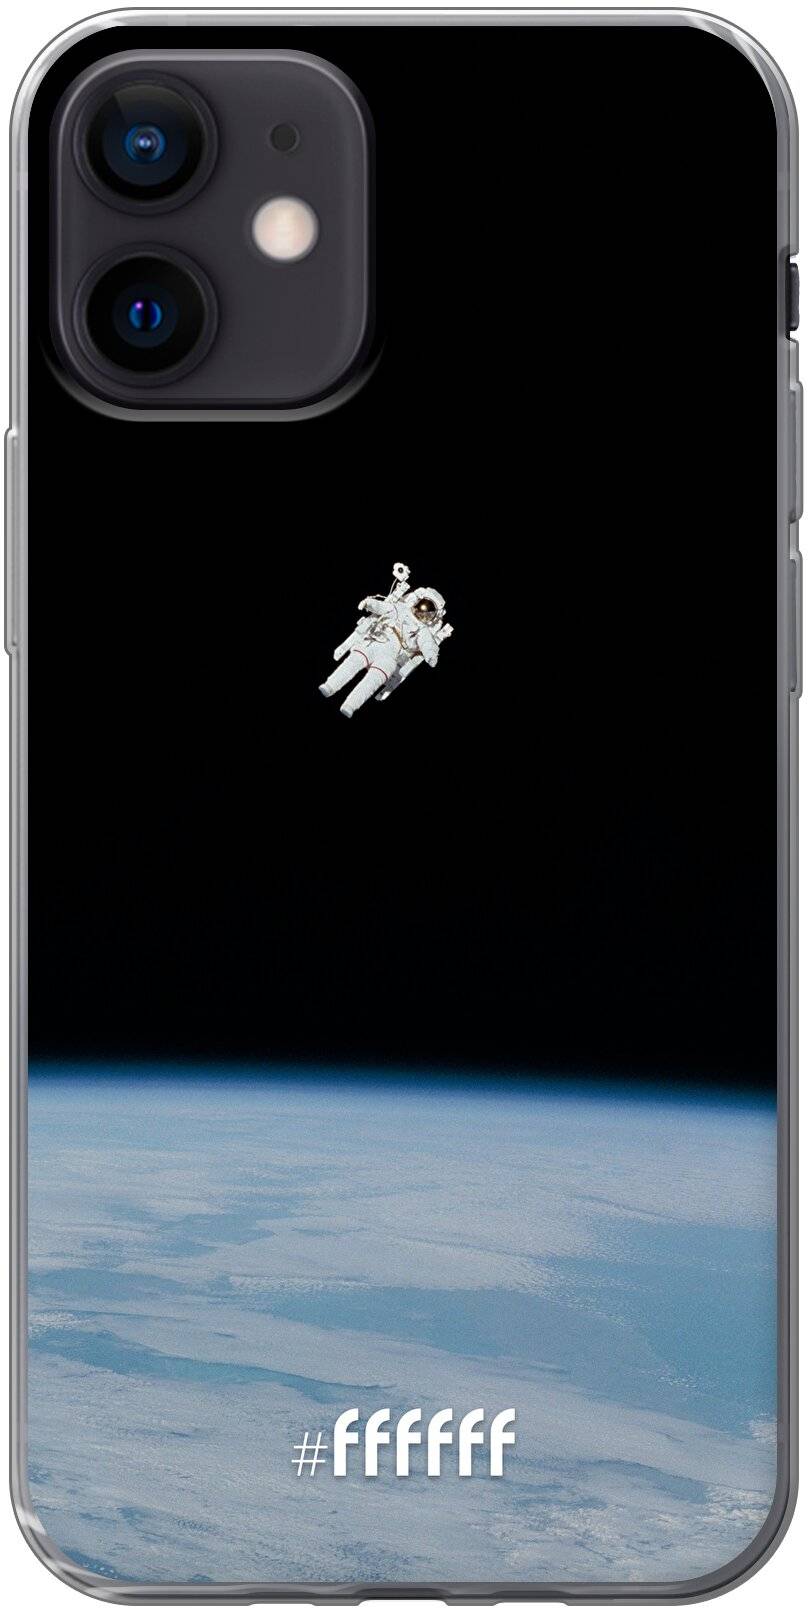 Spacewalk iPhone 12 Mini